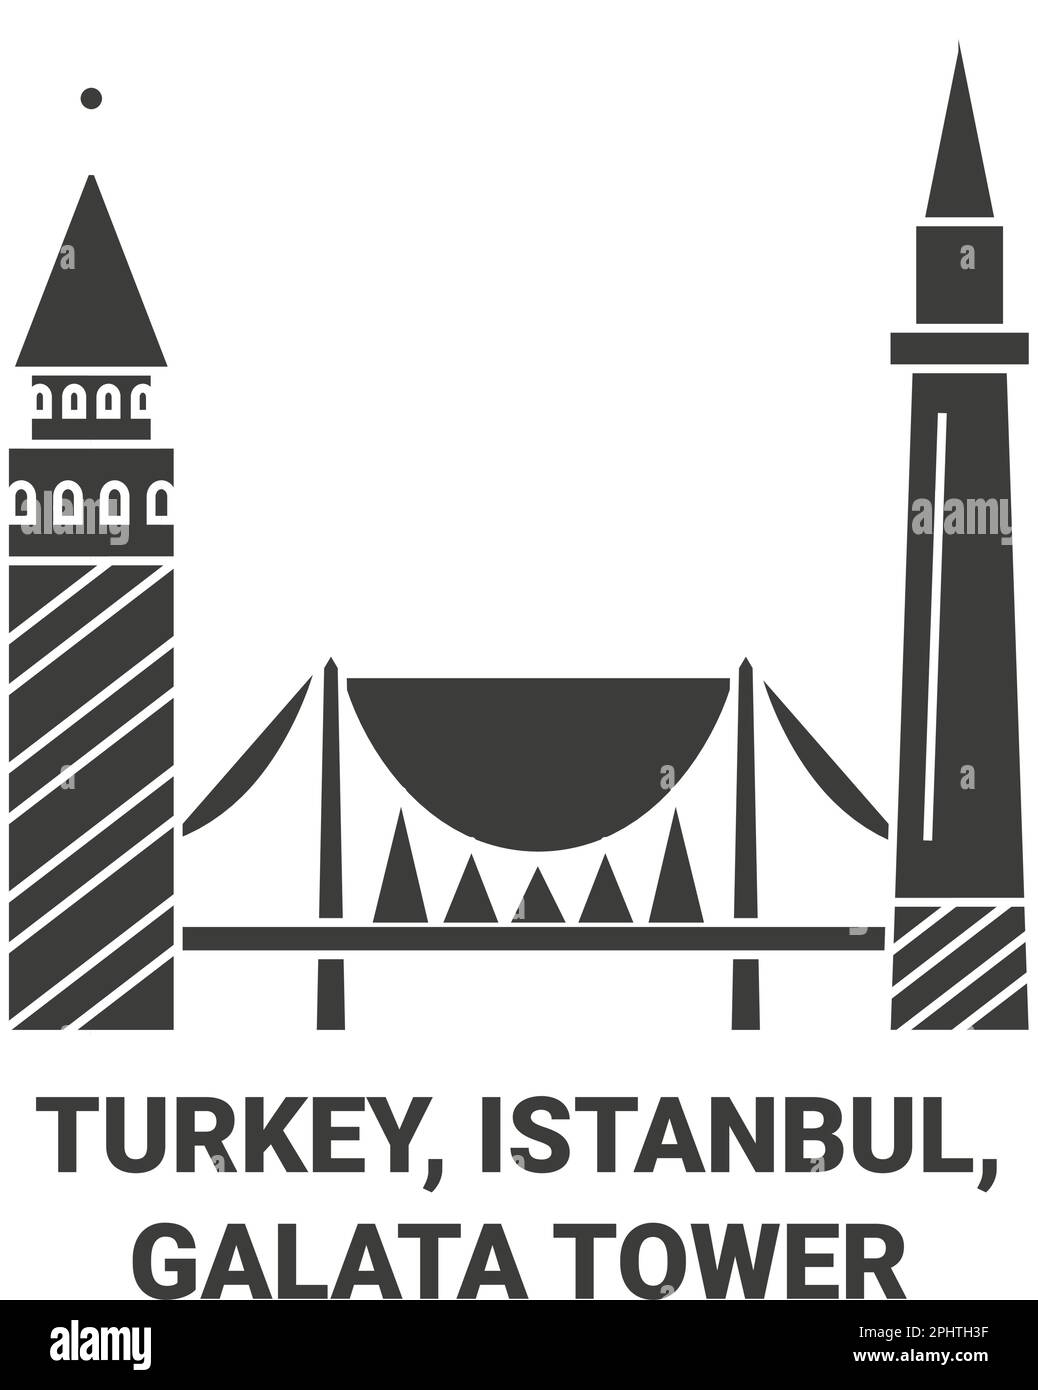 Turkey, Istanbul, Galata Tower travel landmark vector illustration Stock Vector